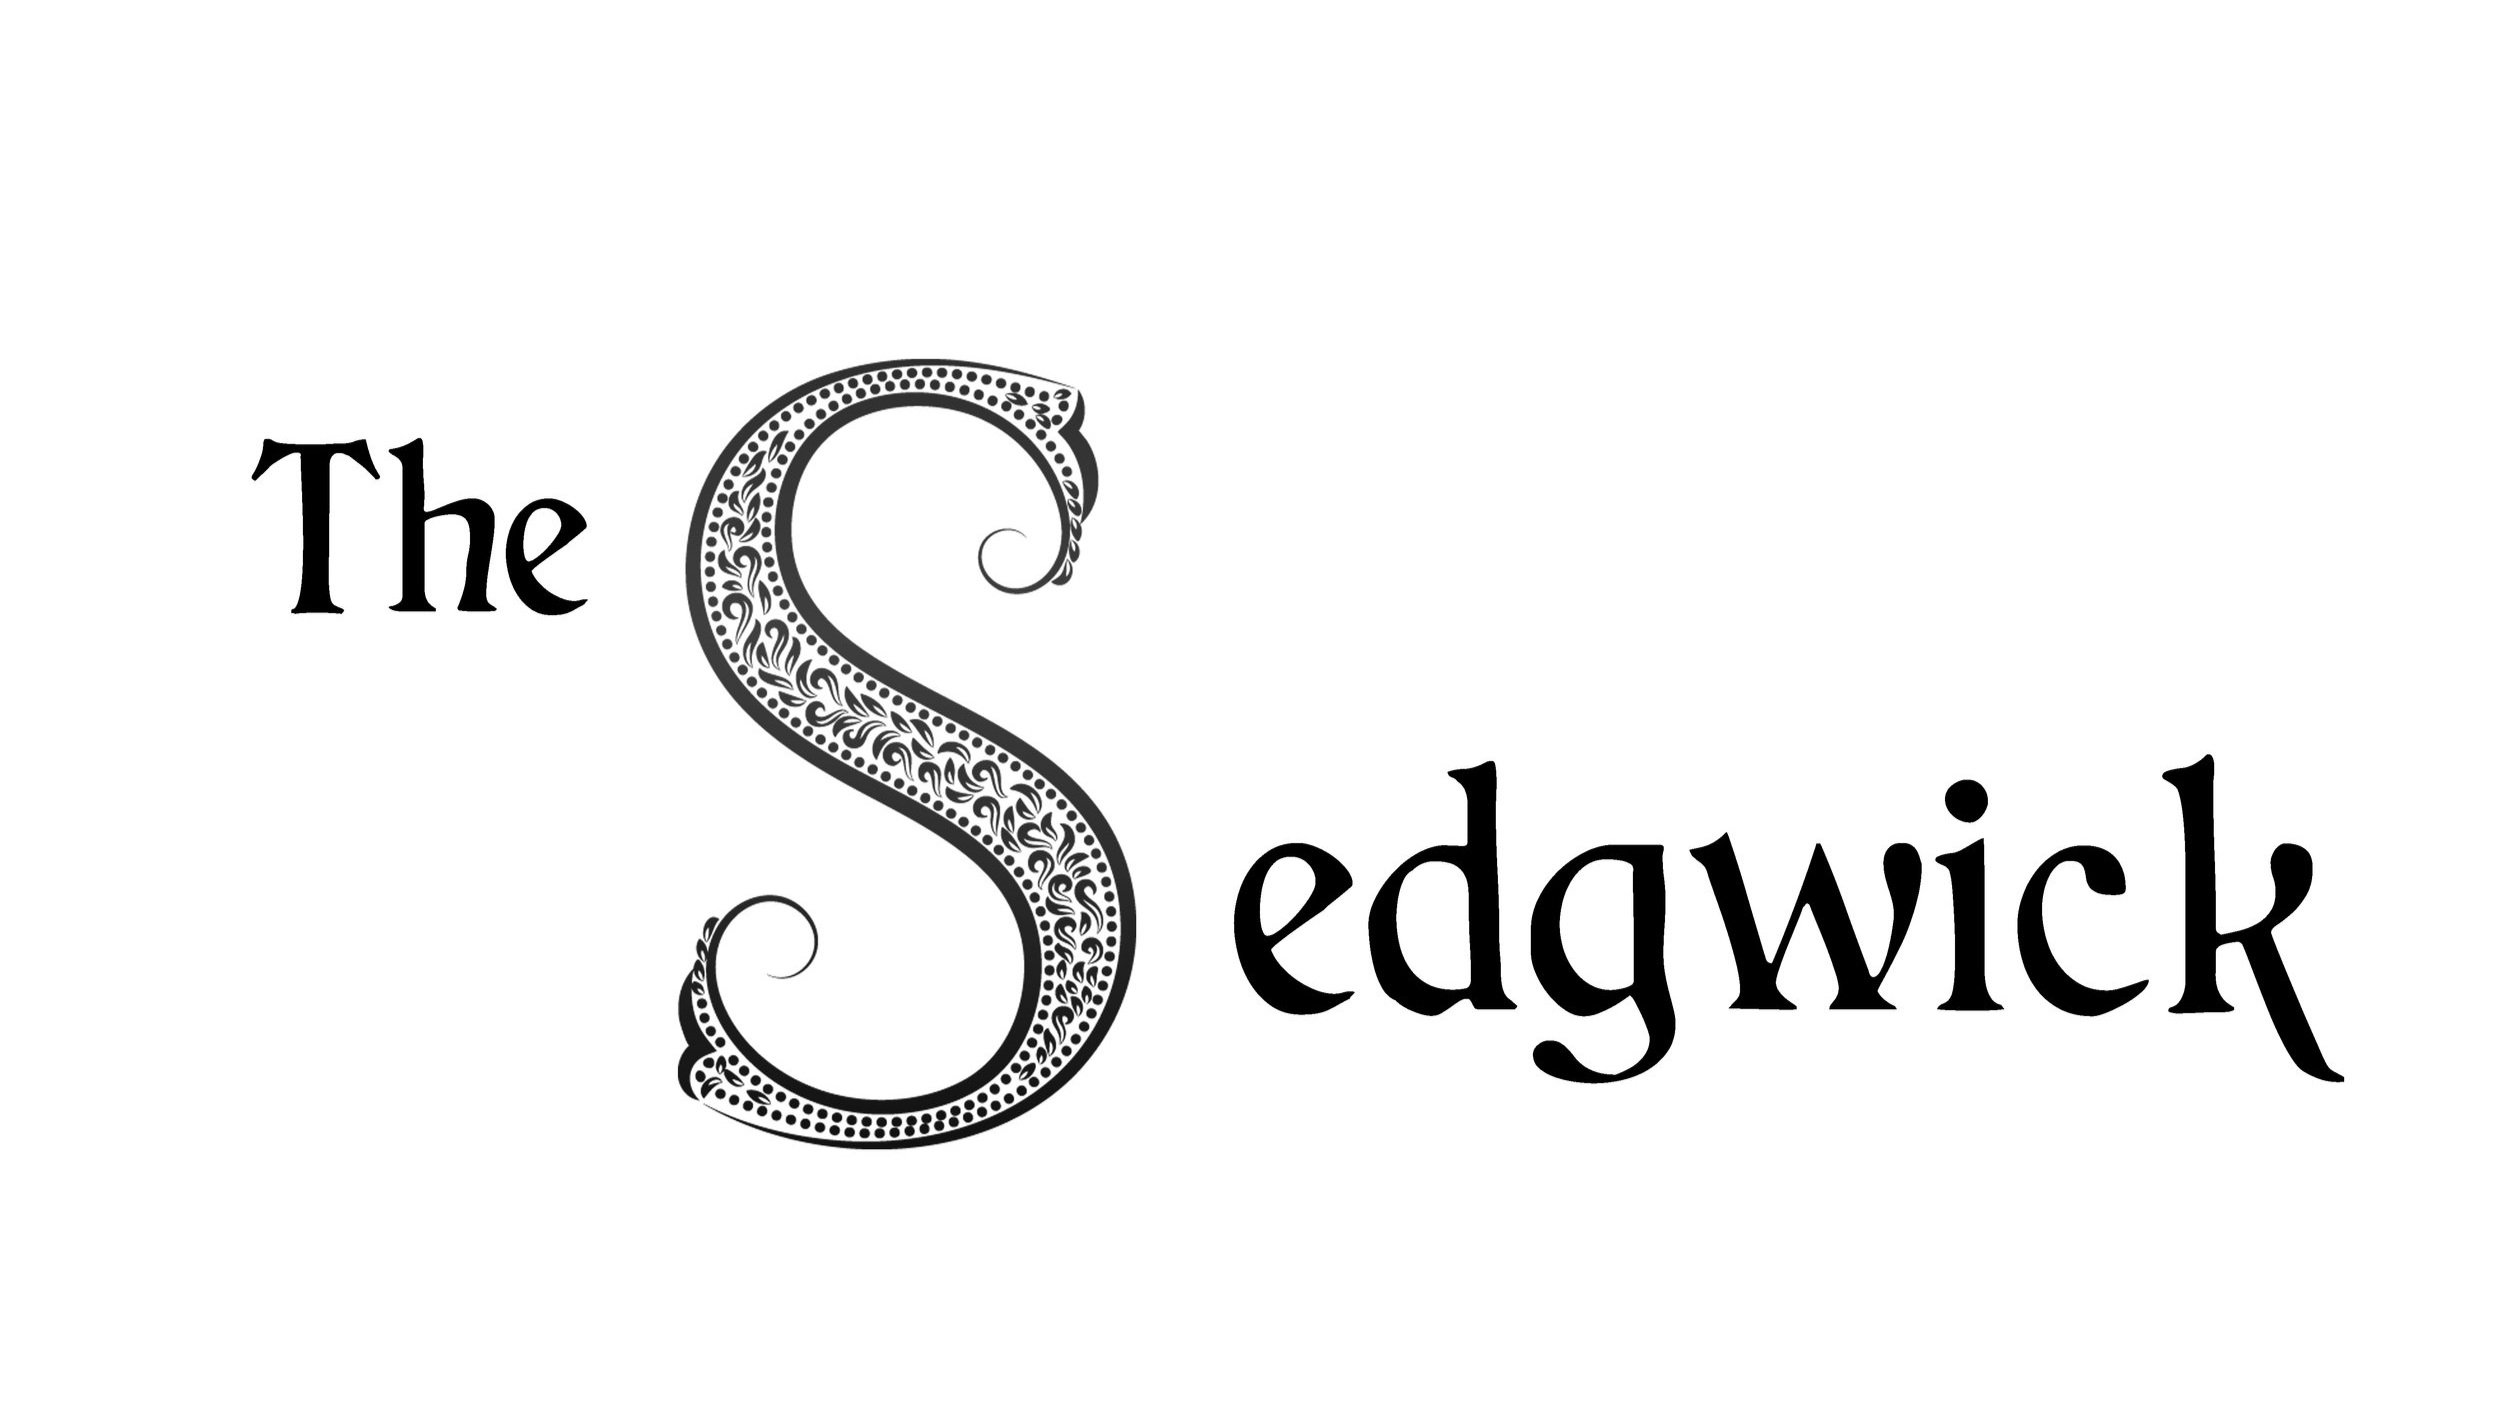 The Sedgwick